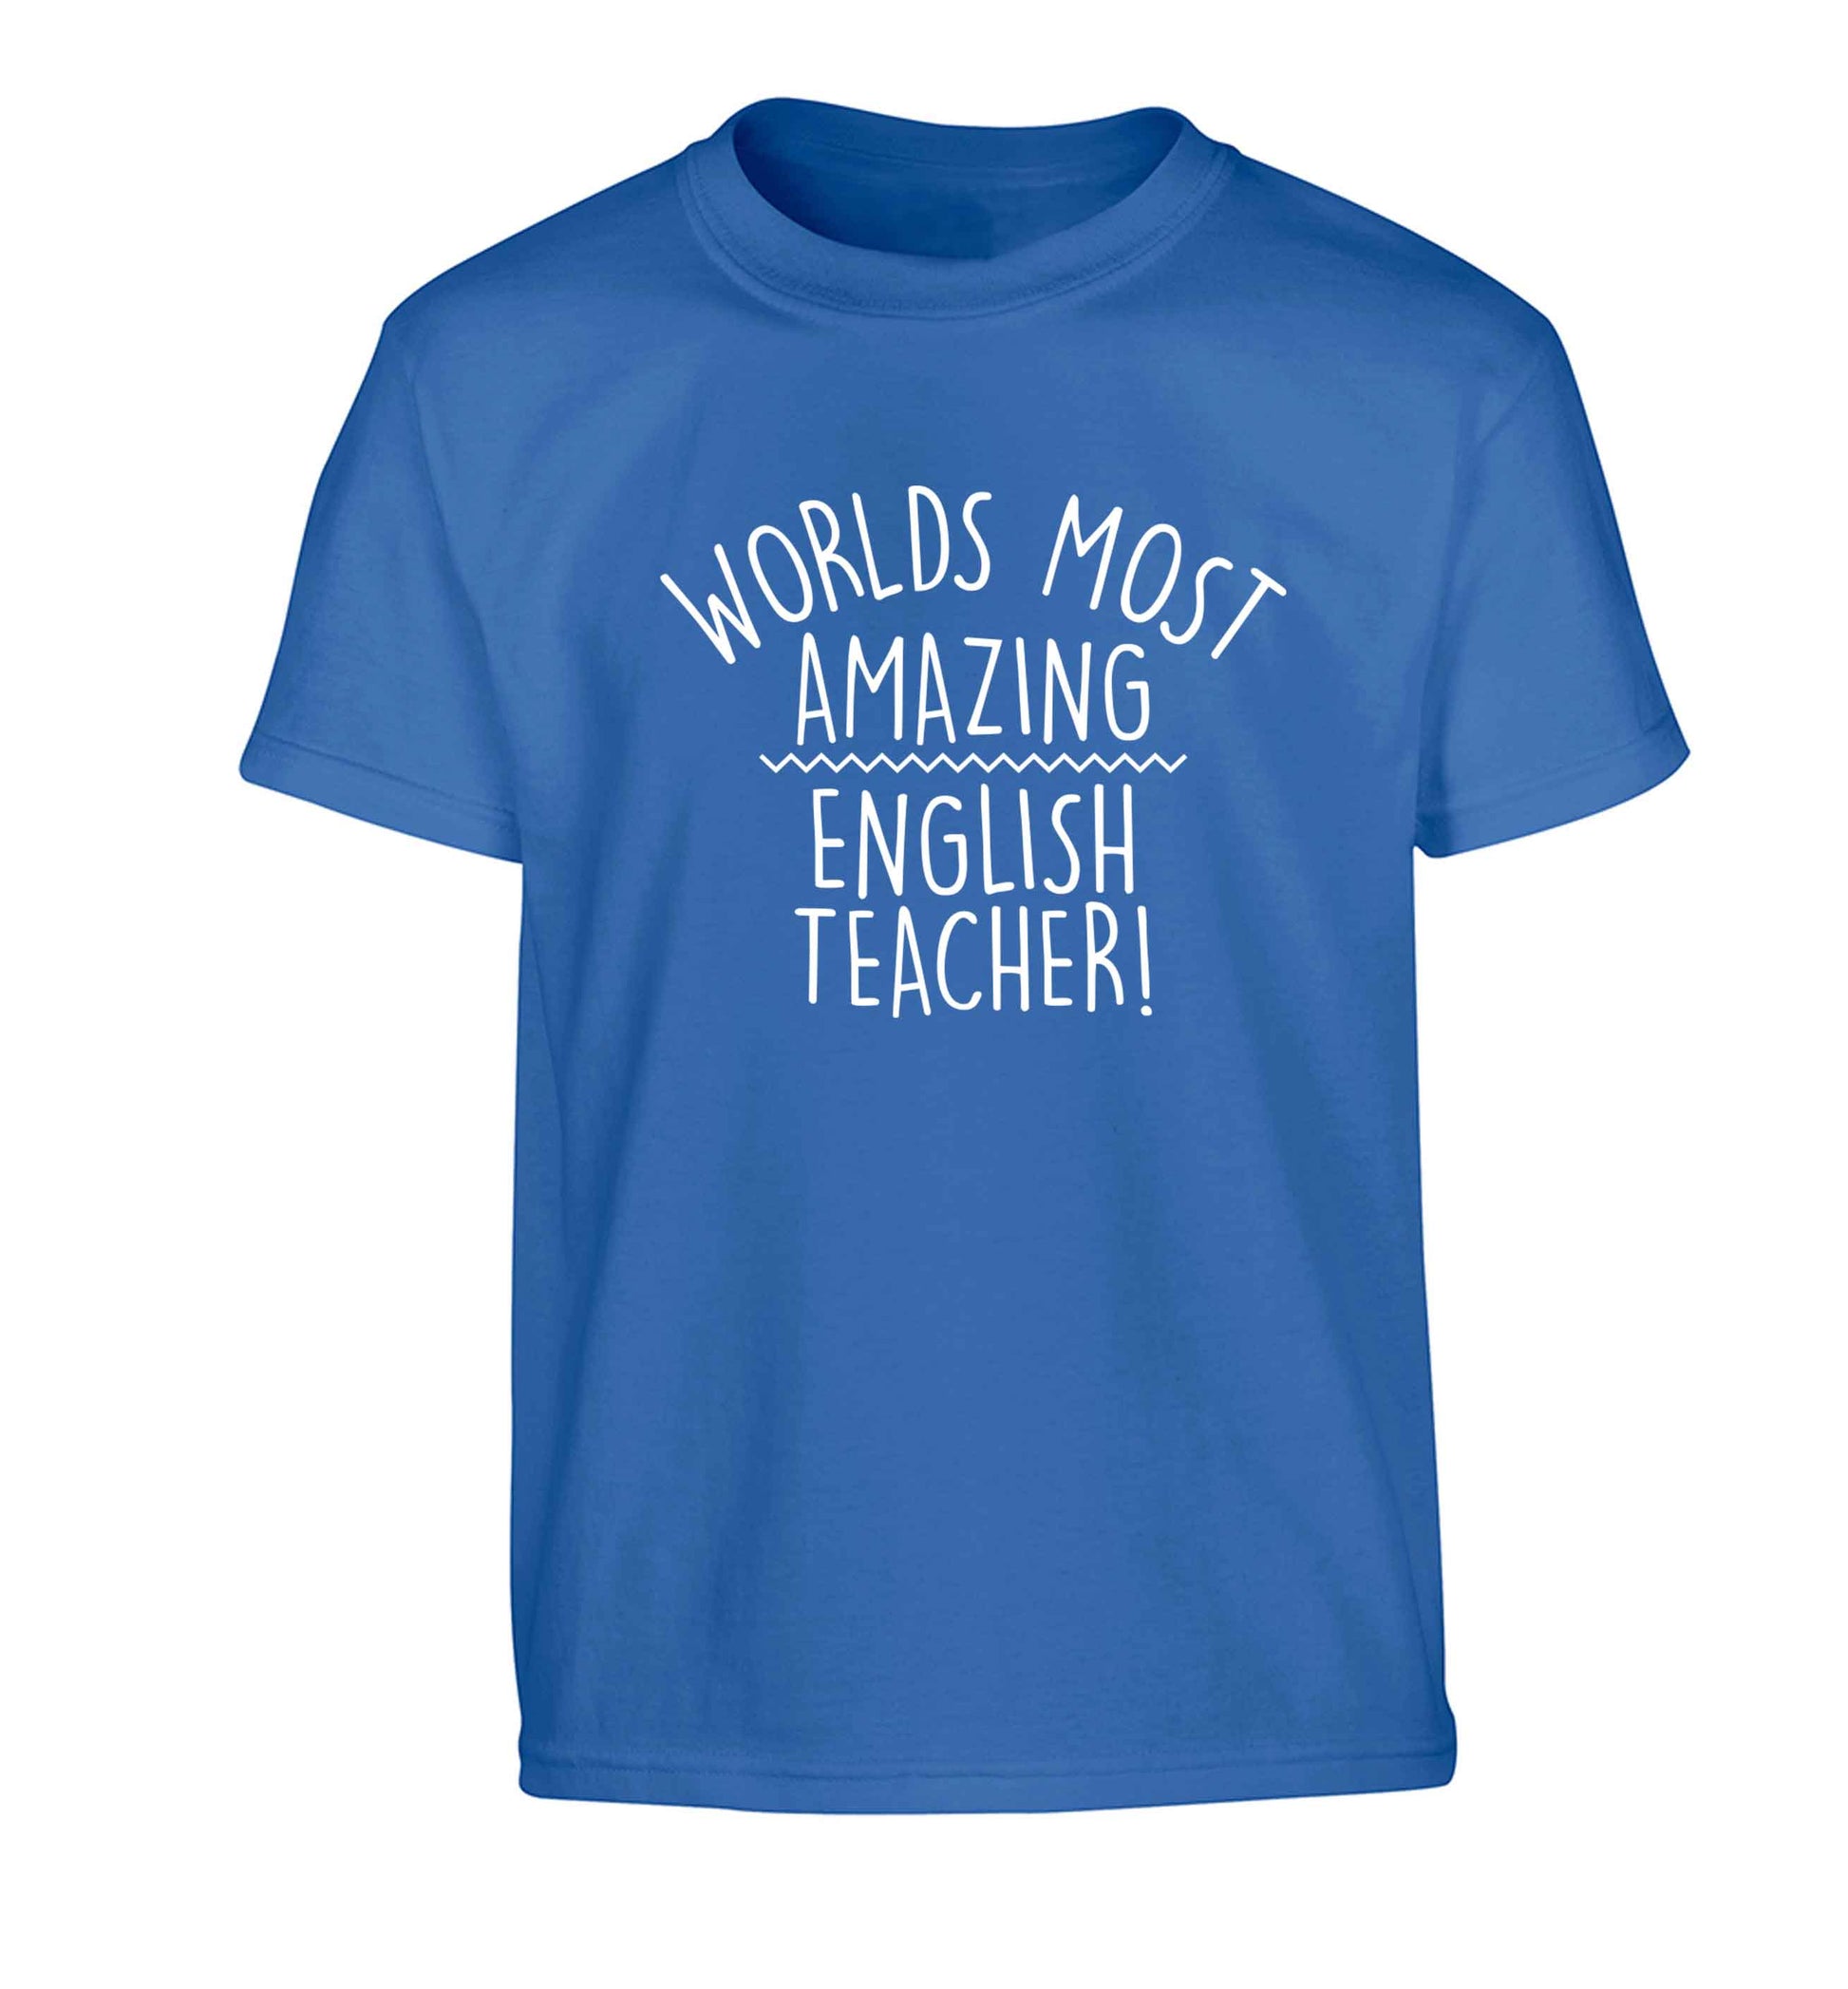 Worlds most amazing English teacher Children's blue Tshirt 12-13 Years